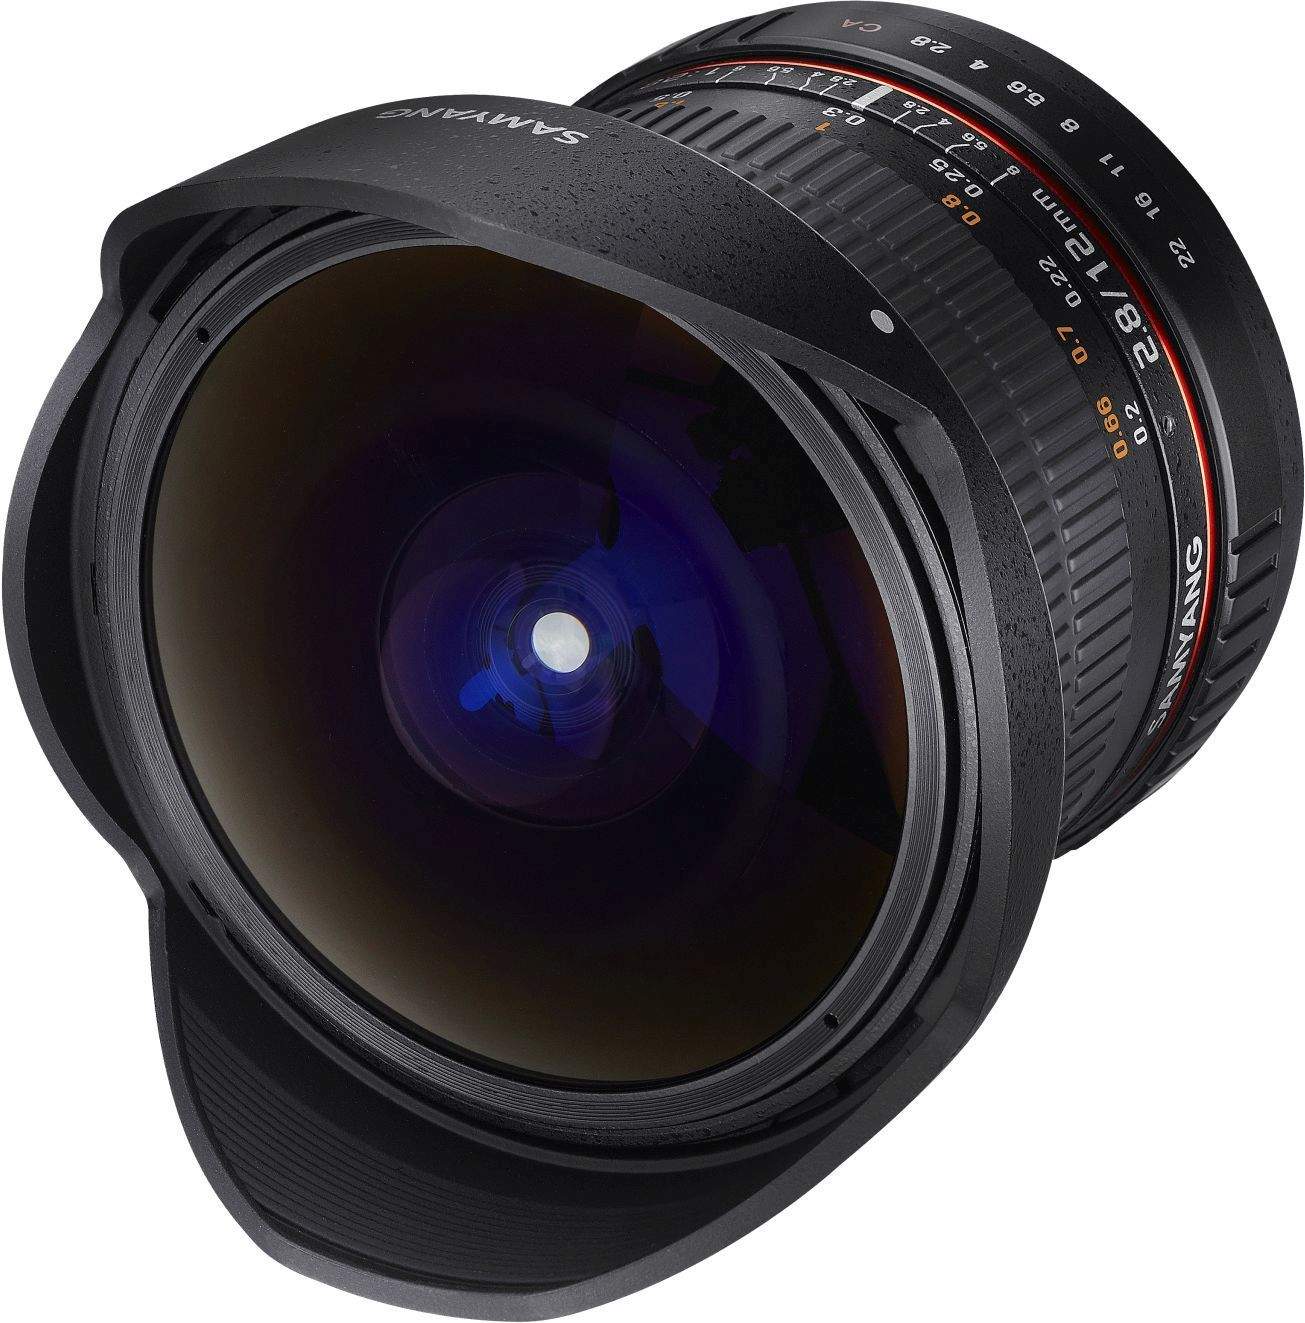 Samyang 12mm F2.8 UMC II Fuji X Full Frame Camera Lens